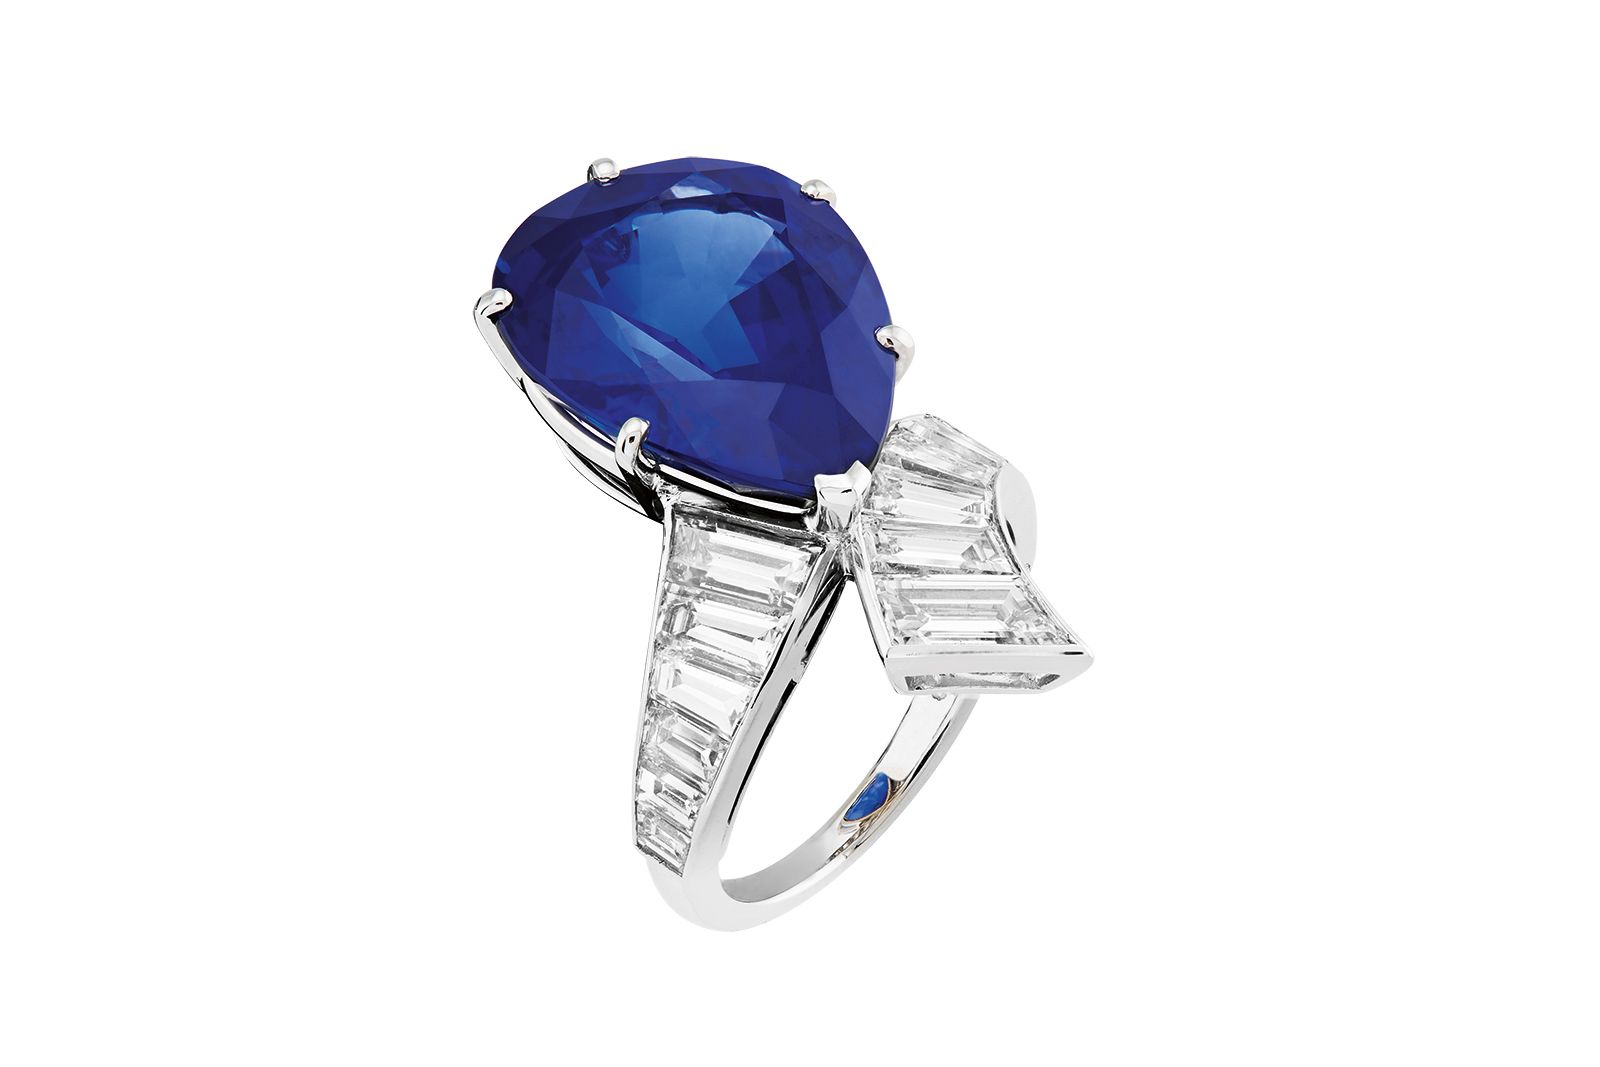 Van Cleef & Arpels Sens Unique ring from 1958 with baguette-cut diamonds and a 16.61 carat Kashmir sapphire in platinum 